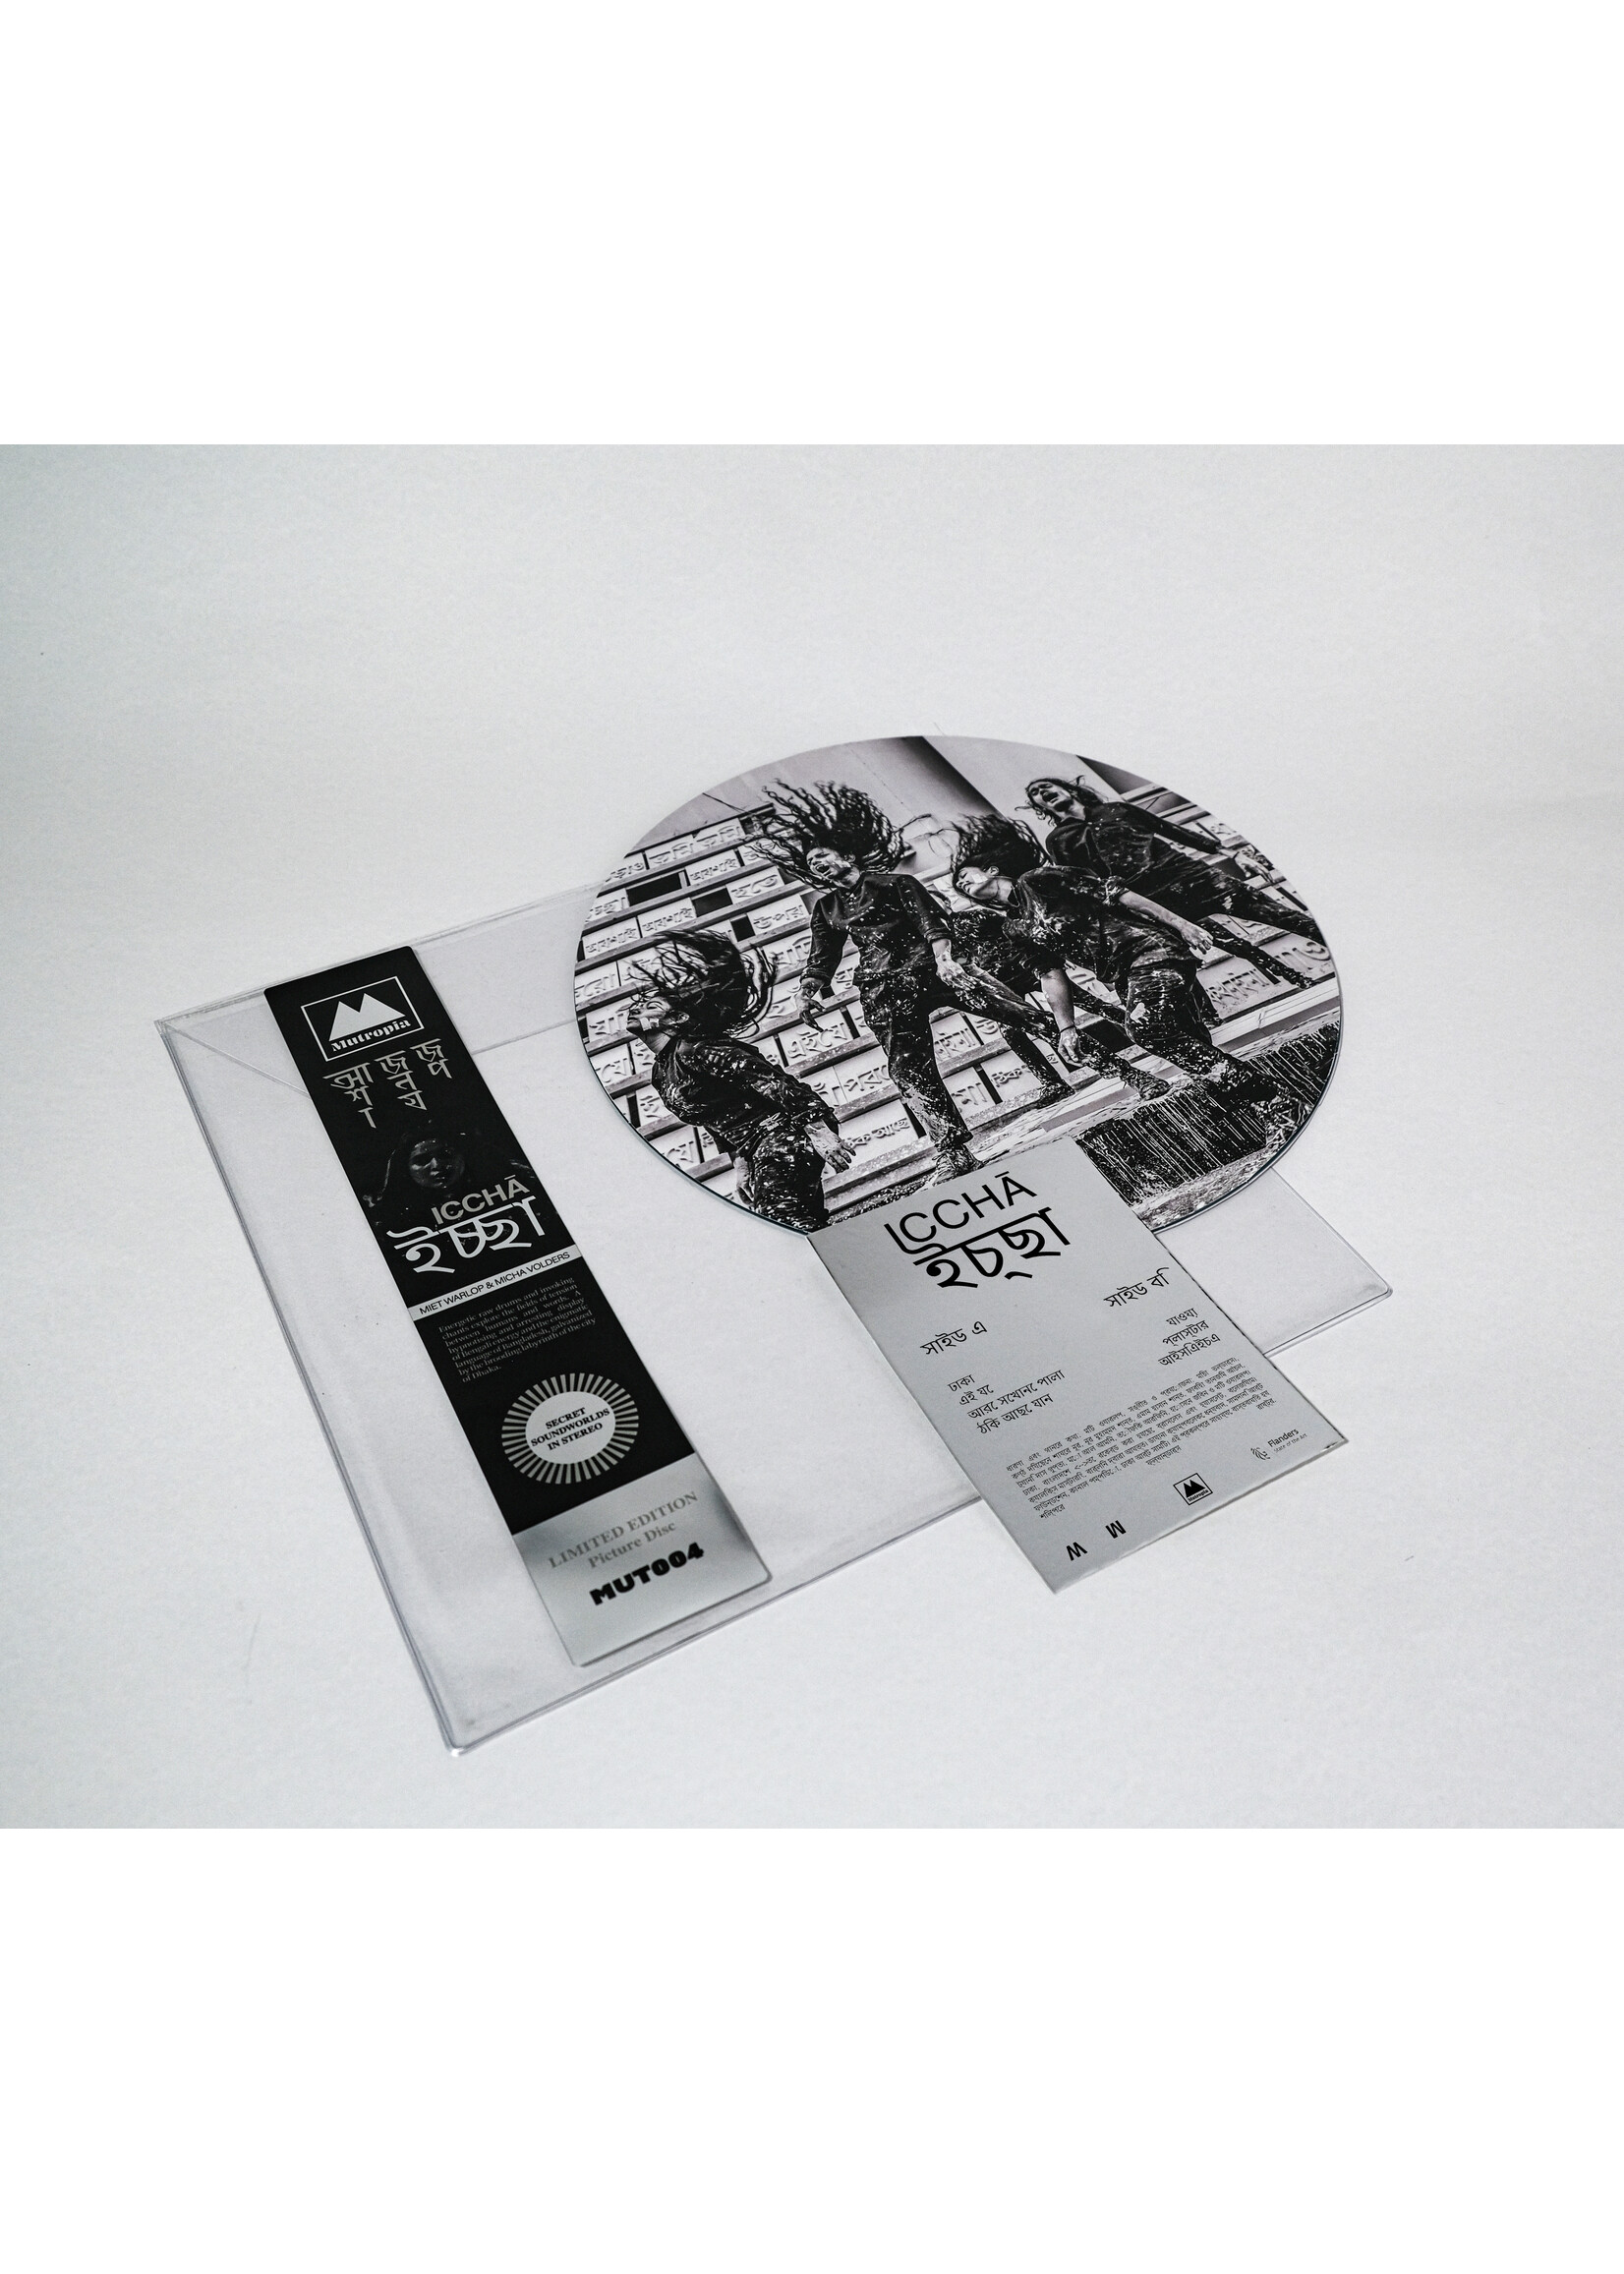 Vinyl collection PRE-ORDER:  ICCHĀ (Vinyl) — MIET WARLOP & MICHA VOLDERS